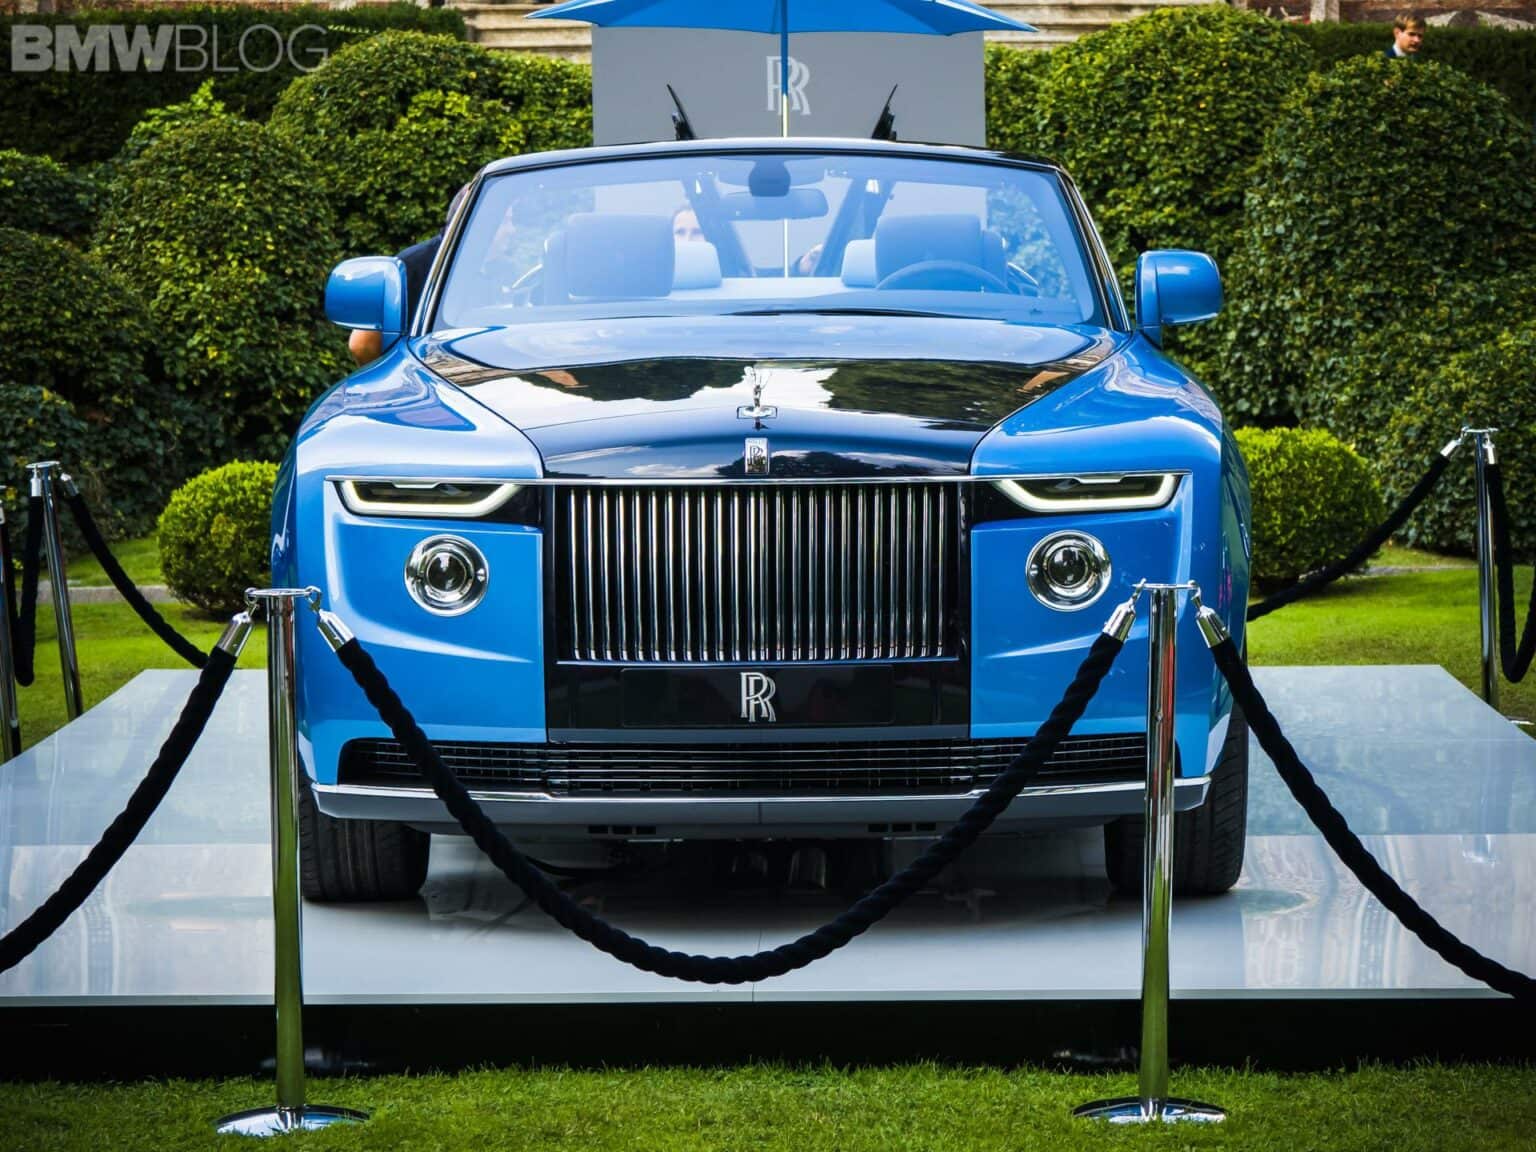 Rolls-Royce Boat Tail from Villa d'Este - Live Trading News